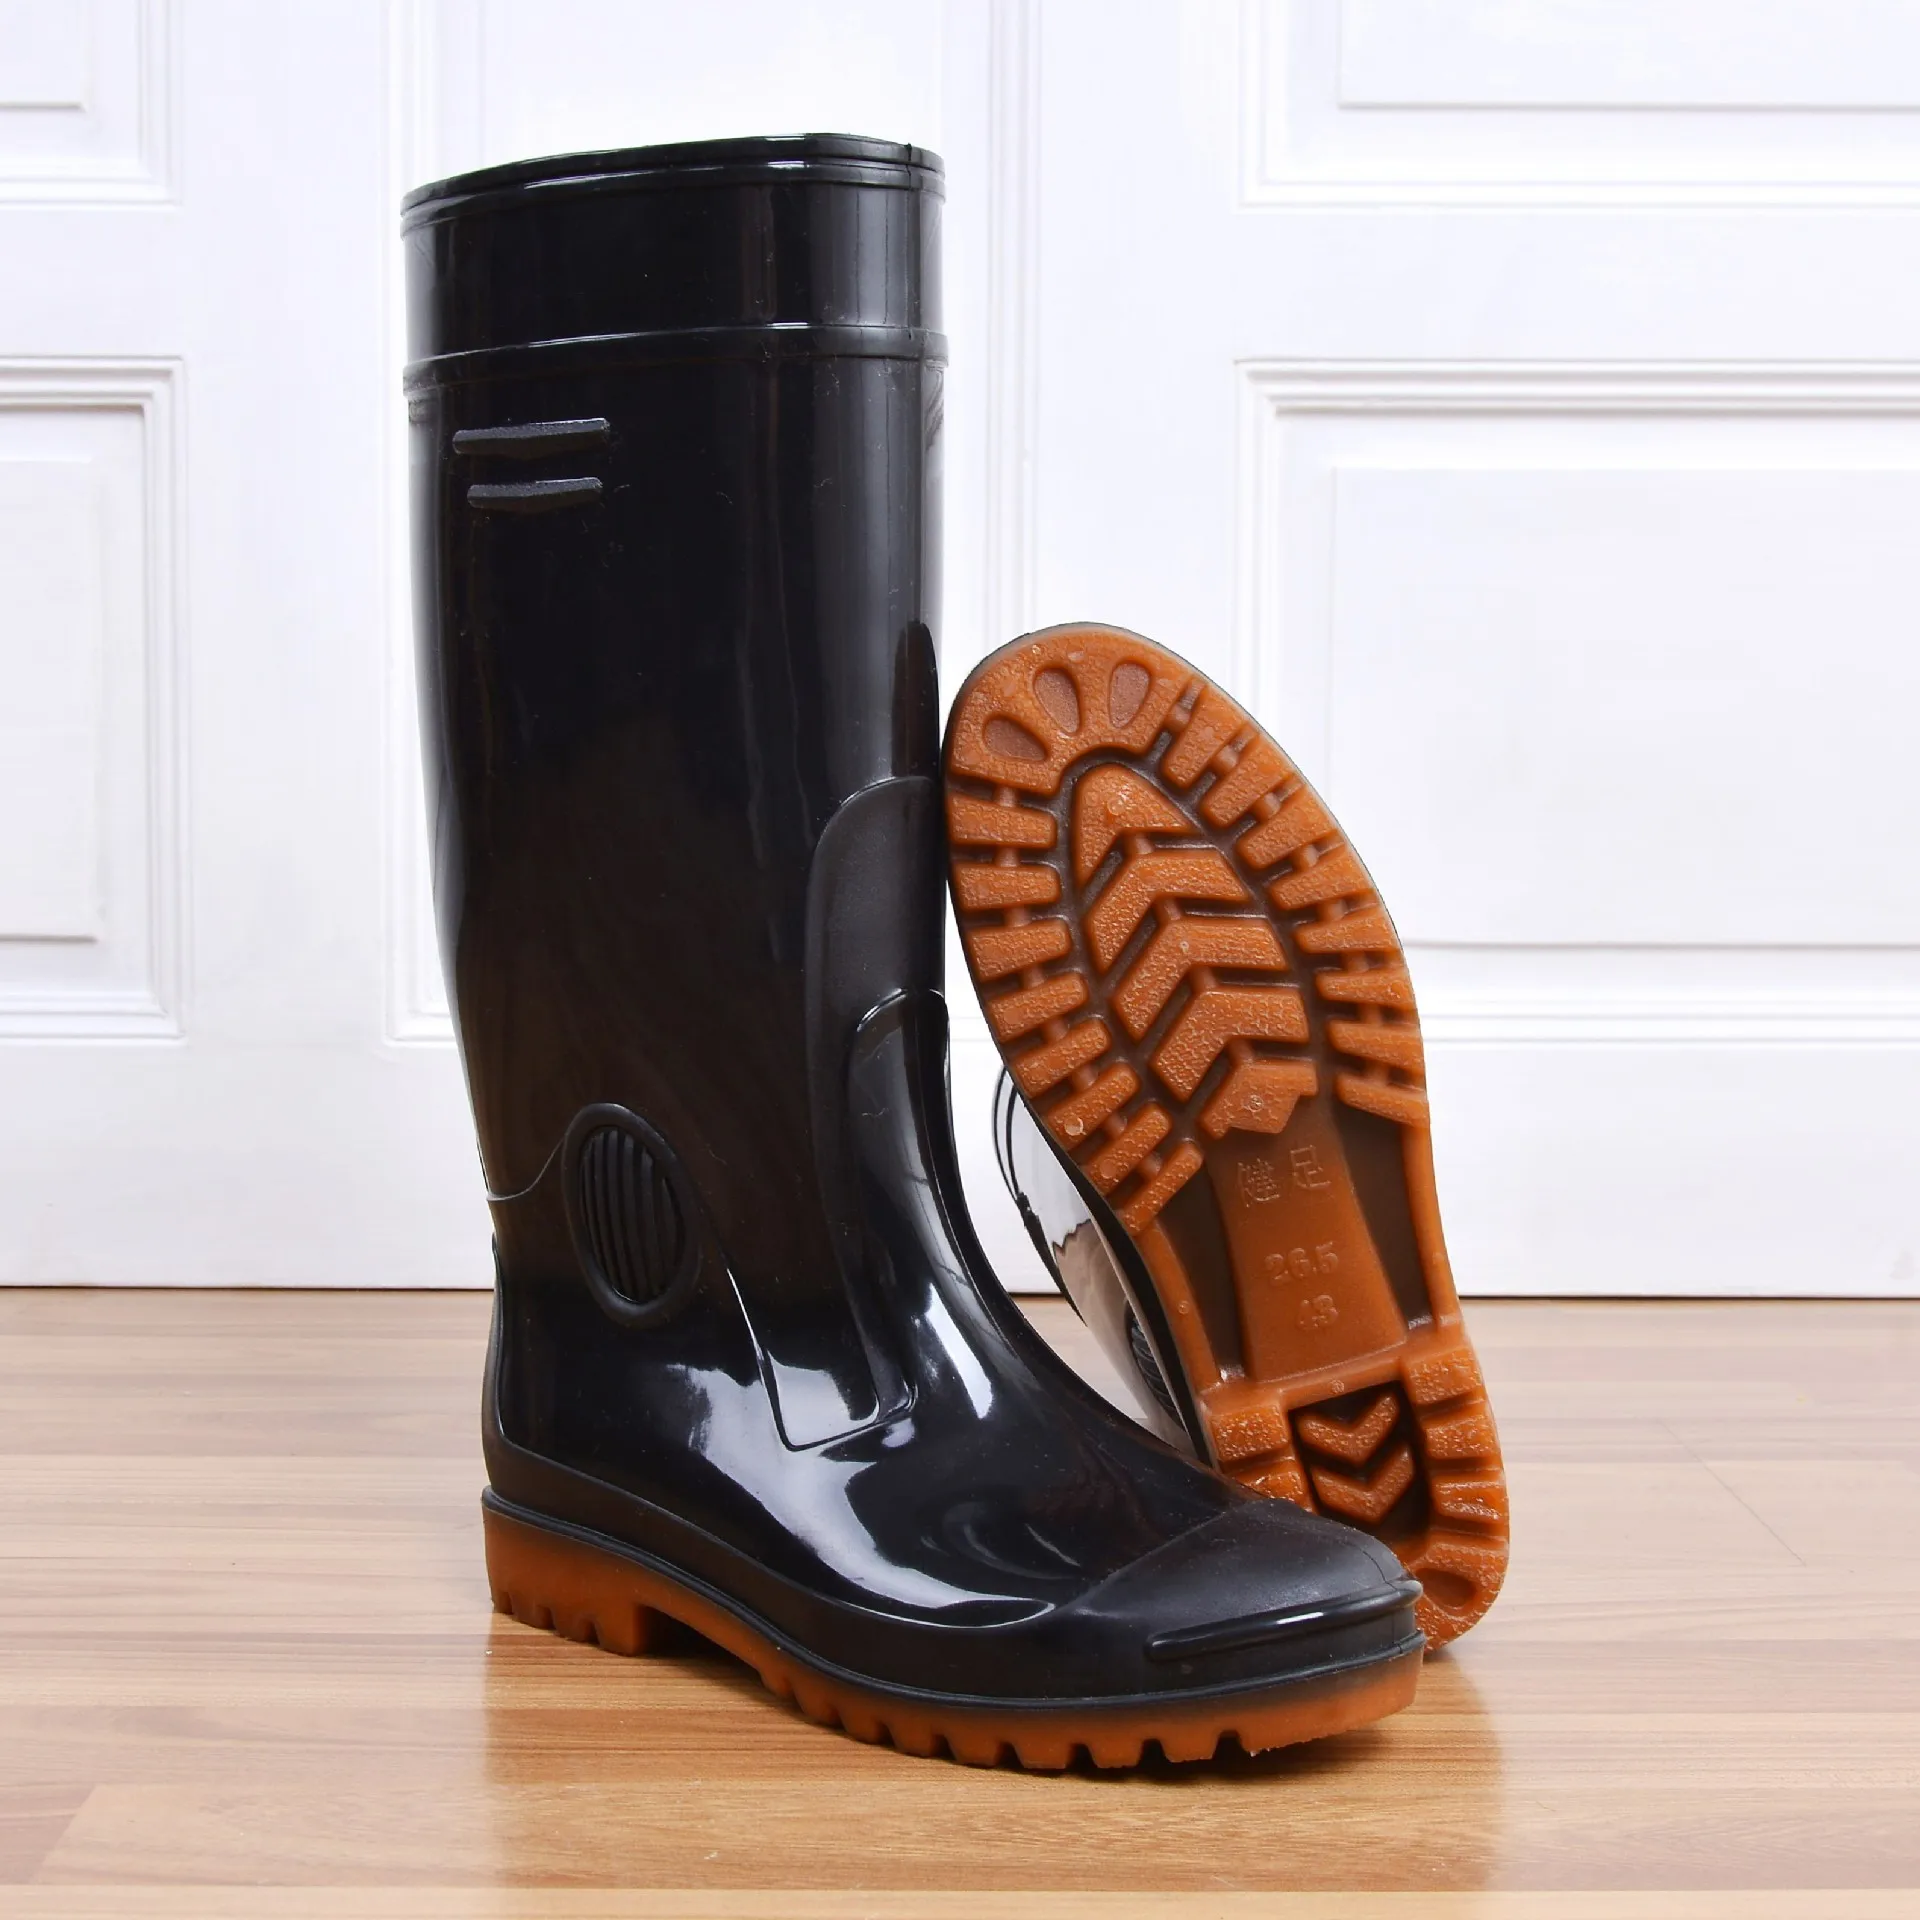 

Outdoor botas safety shoes rain boots men non-slip waterproof high rainboots worker high rainwear cheap PVC gumboots for adult, Black